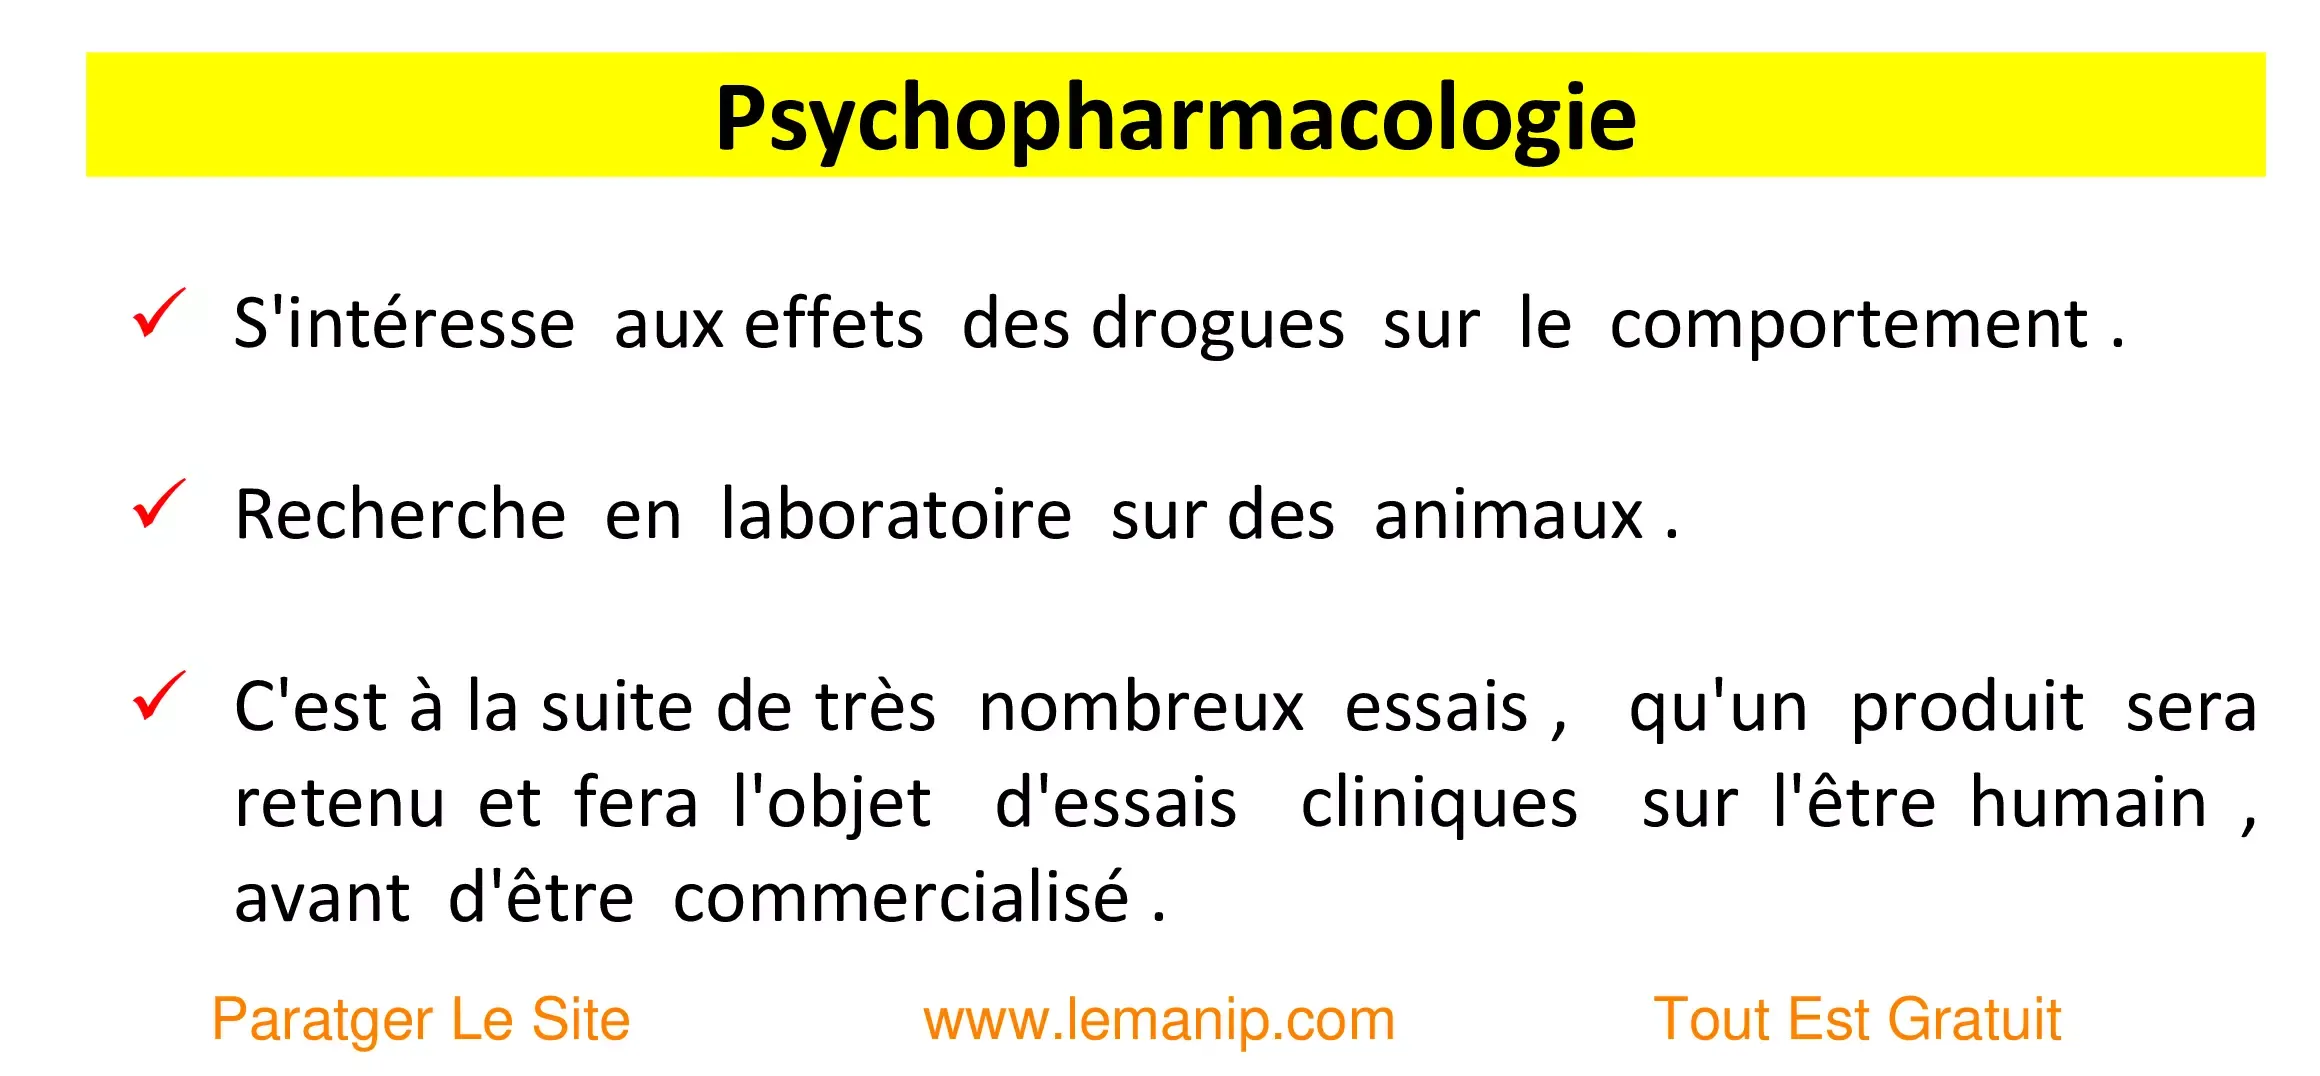 Psychopharmacologie